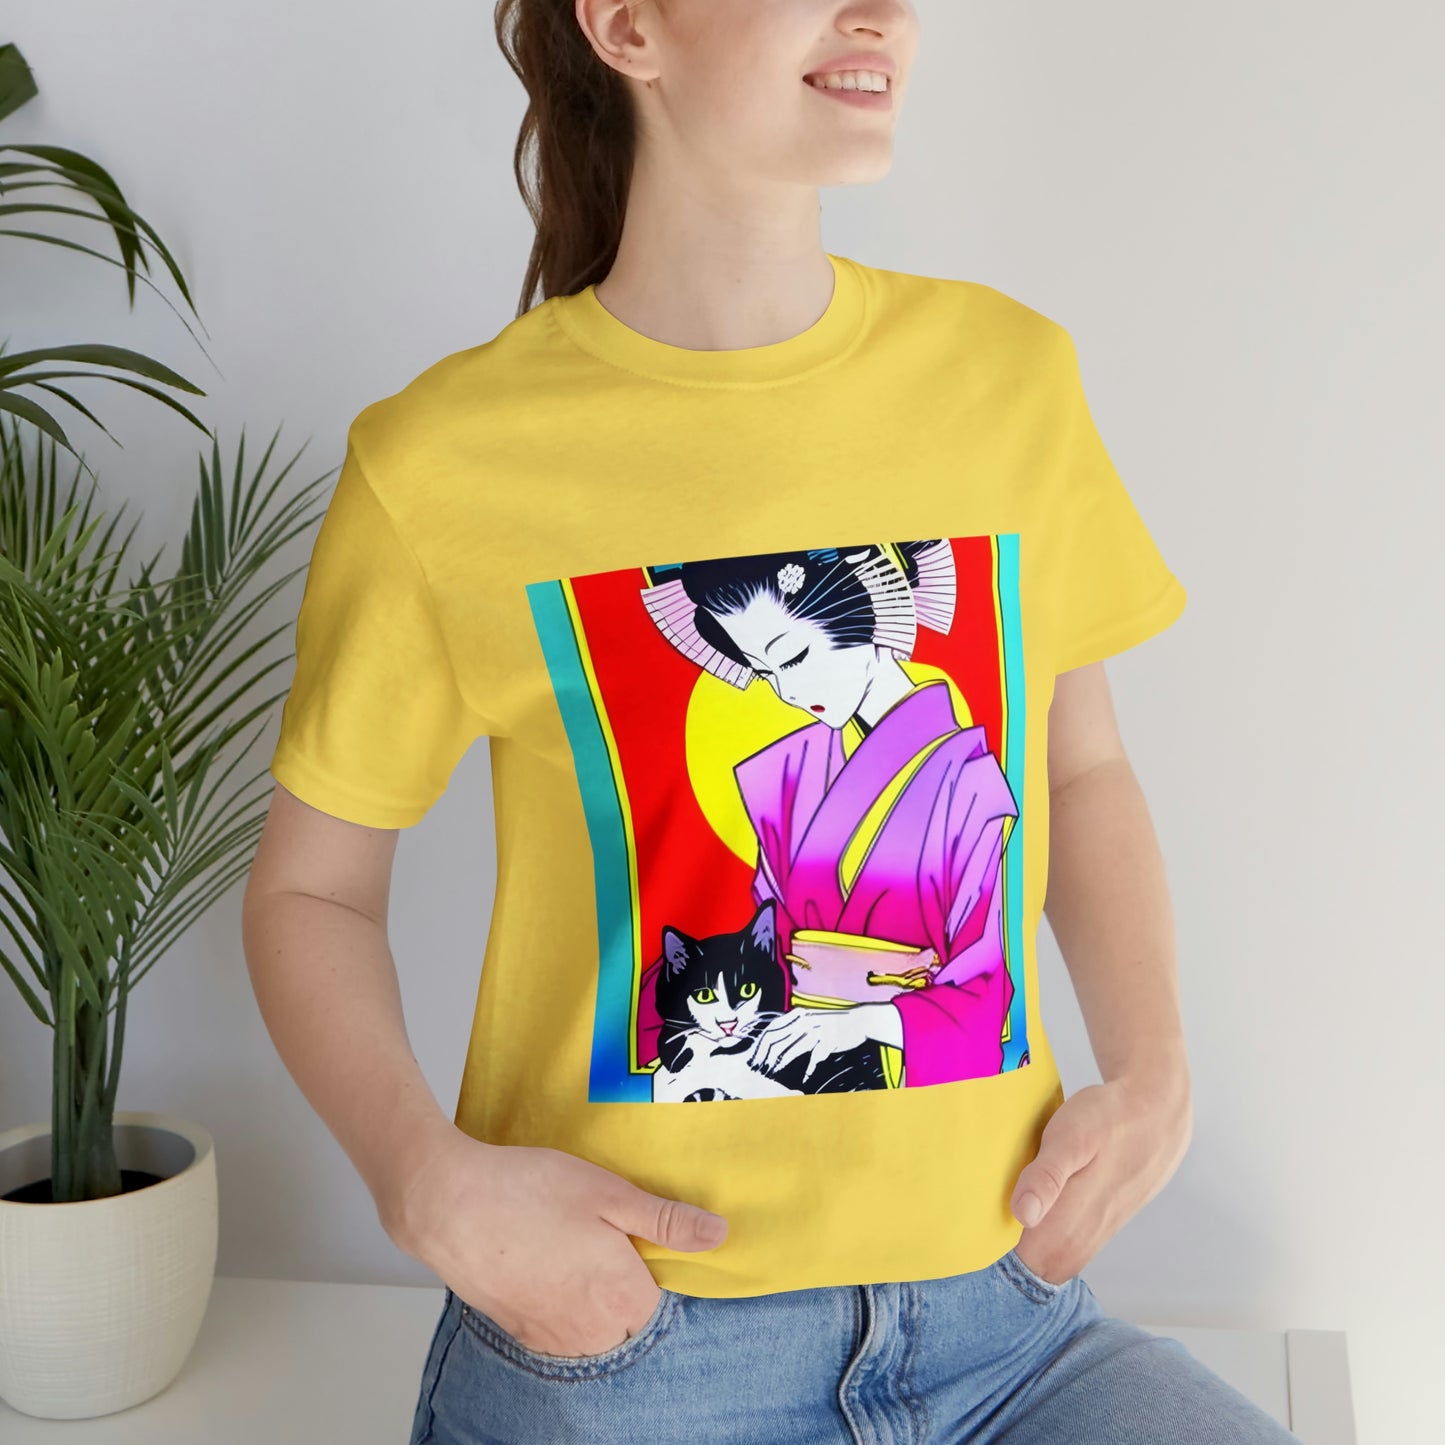 Geisha and cat T-shirt, kitty Japanese shirt, Harajuku streetstyle fashion, kawaii cool vintage tee shirt, edgy shirt, maiko and cat shirt